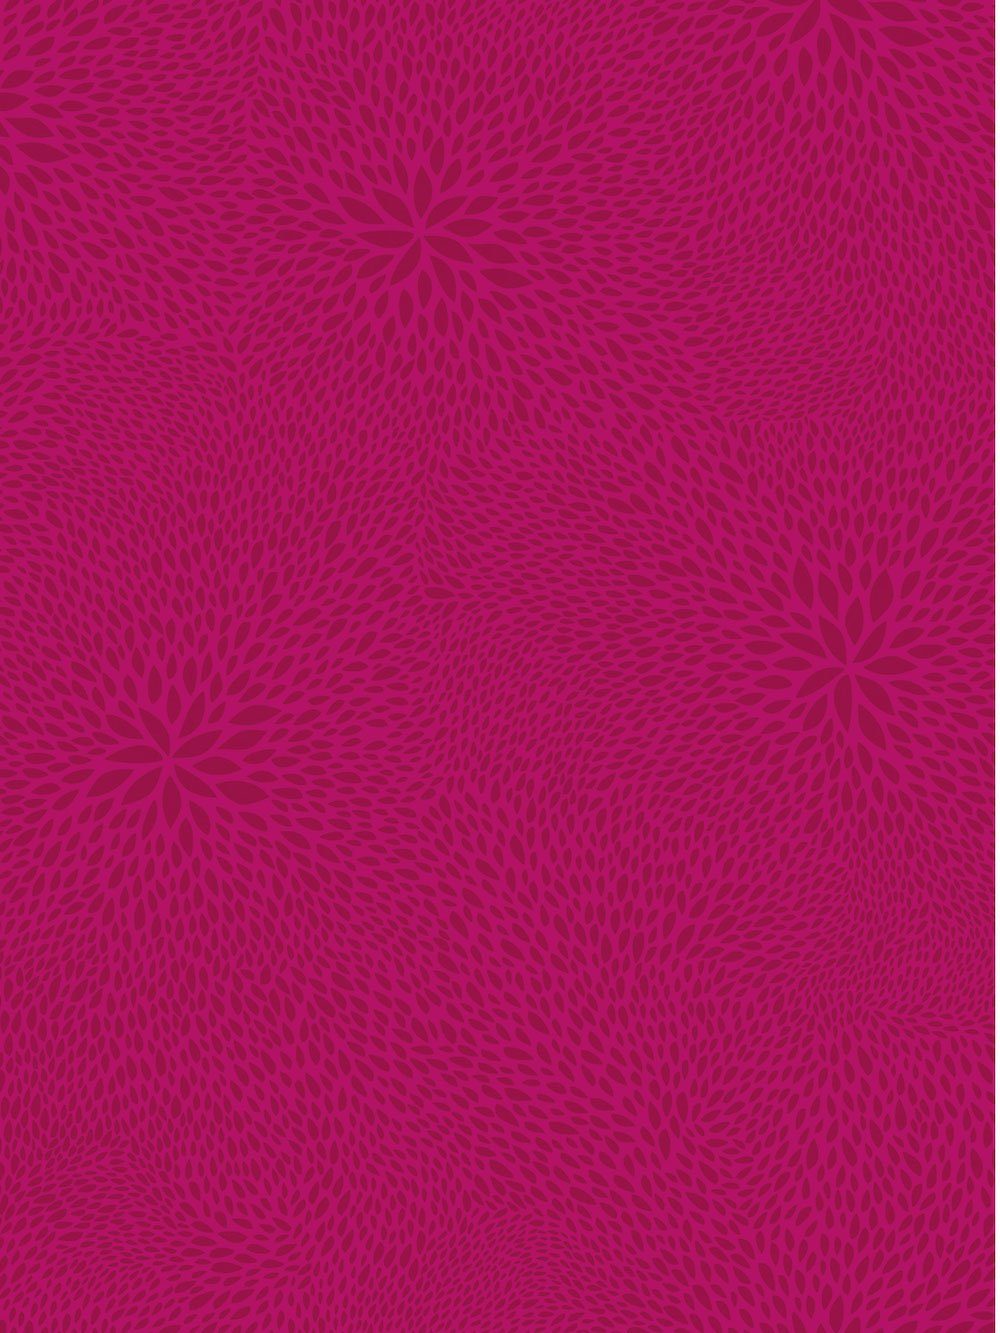 H-Erzmade Zeichenpapier Décopatch-Papier 653 Muster Blütenblätter pink, 30